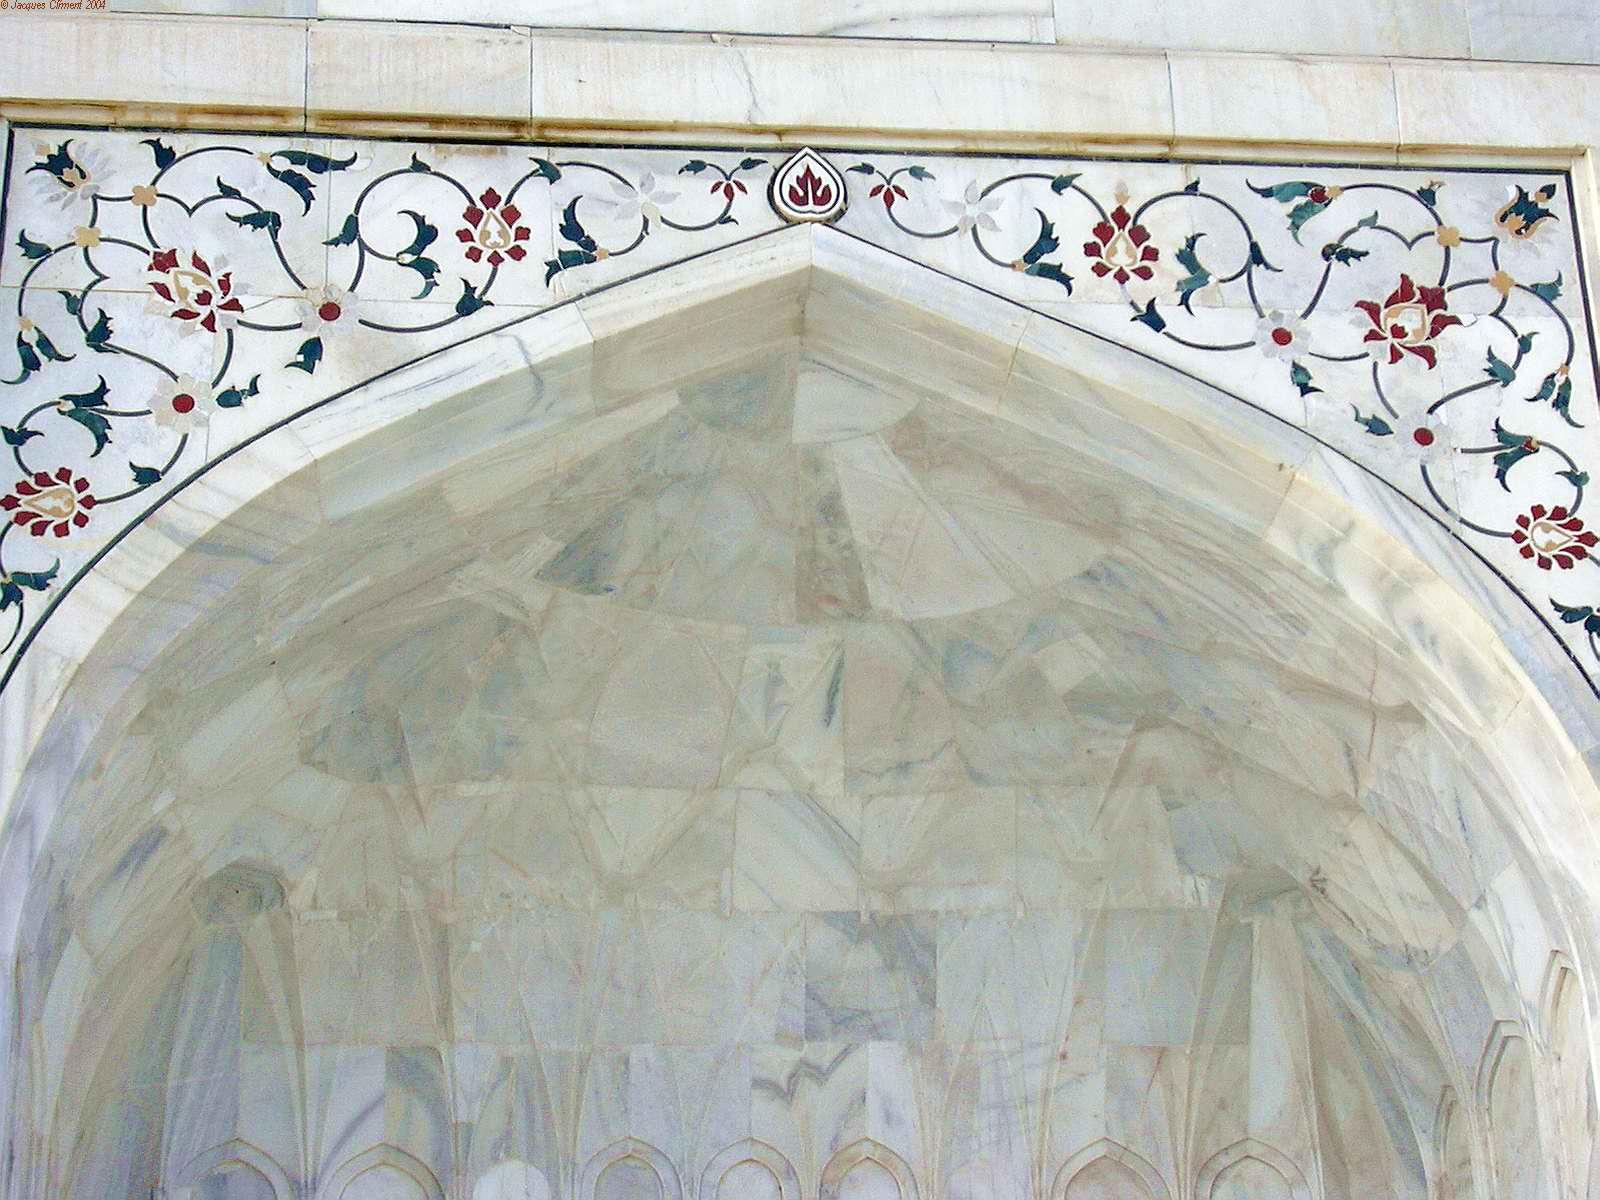 Taj Mahal India Arch close view - 581 :: World All Details